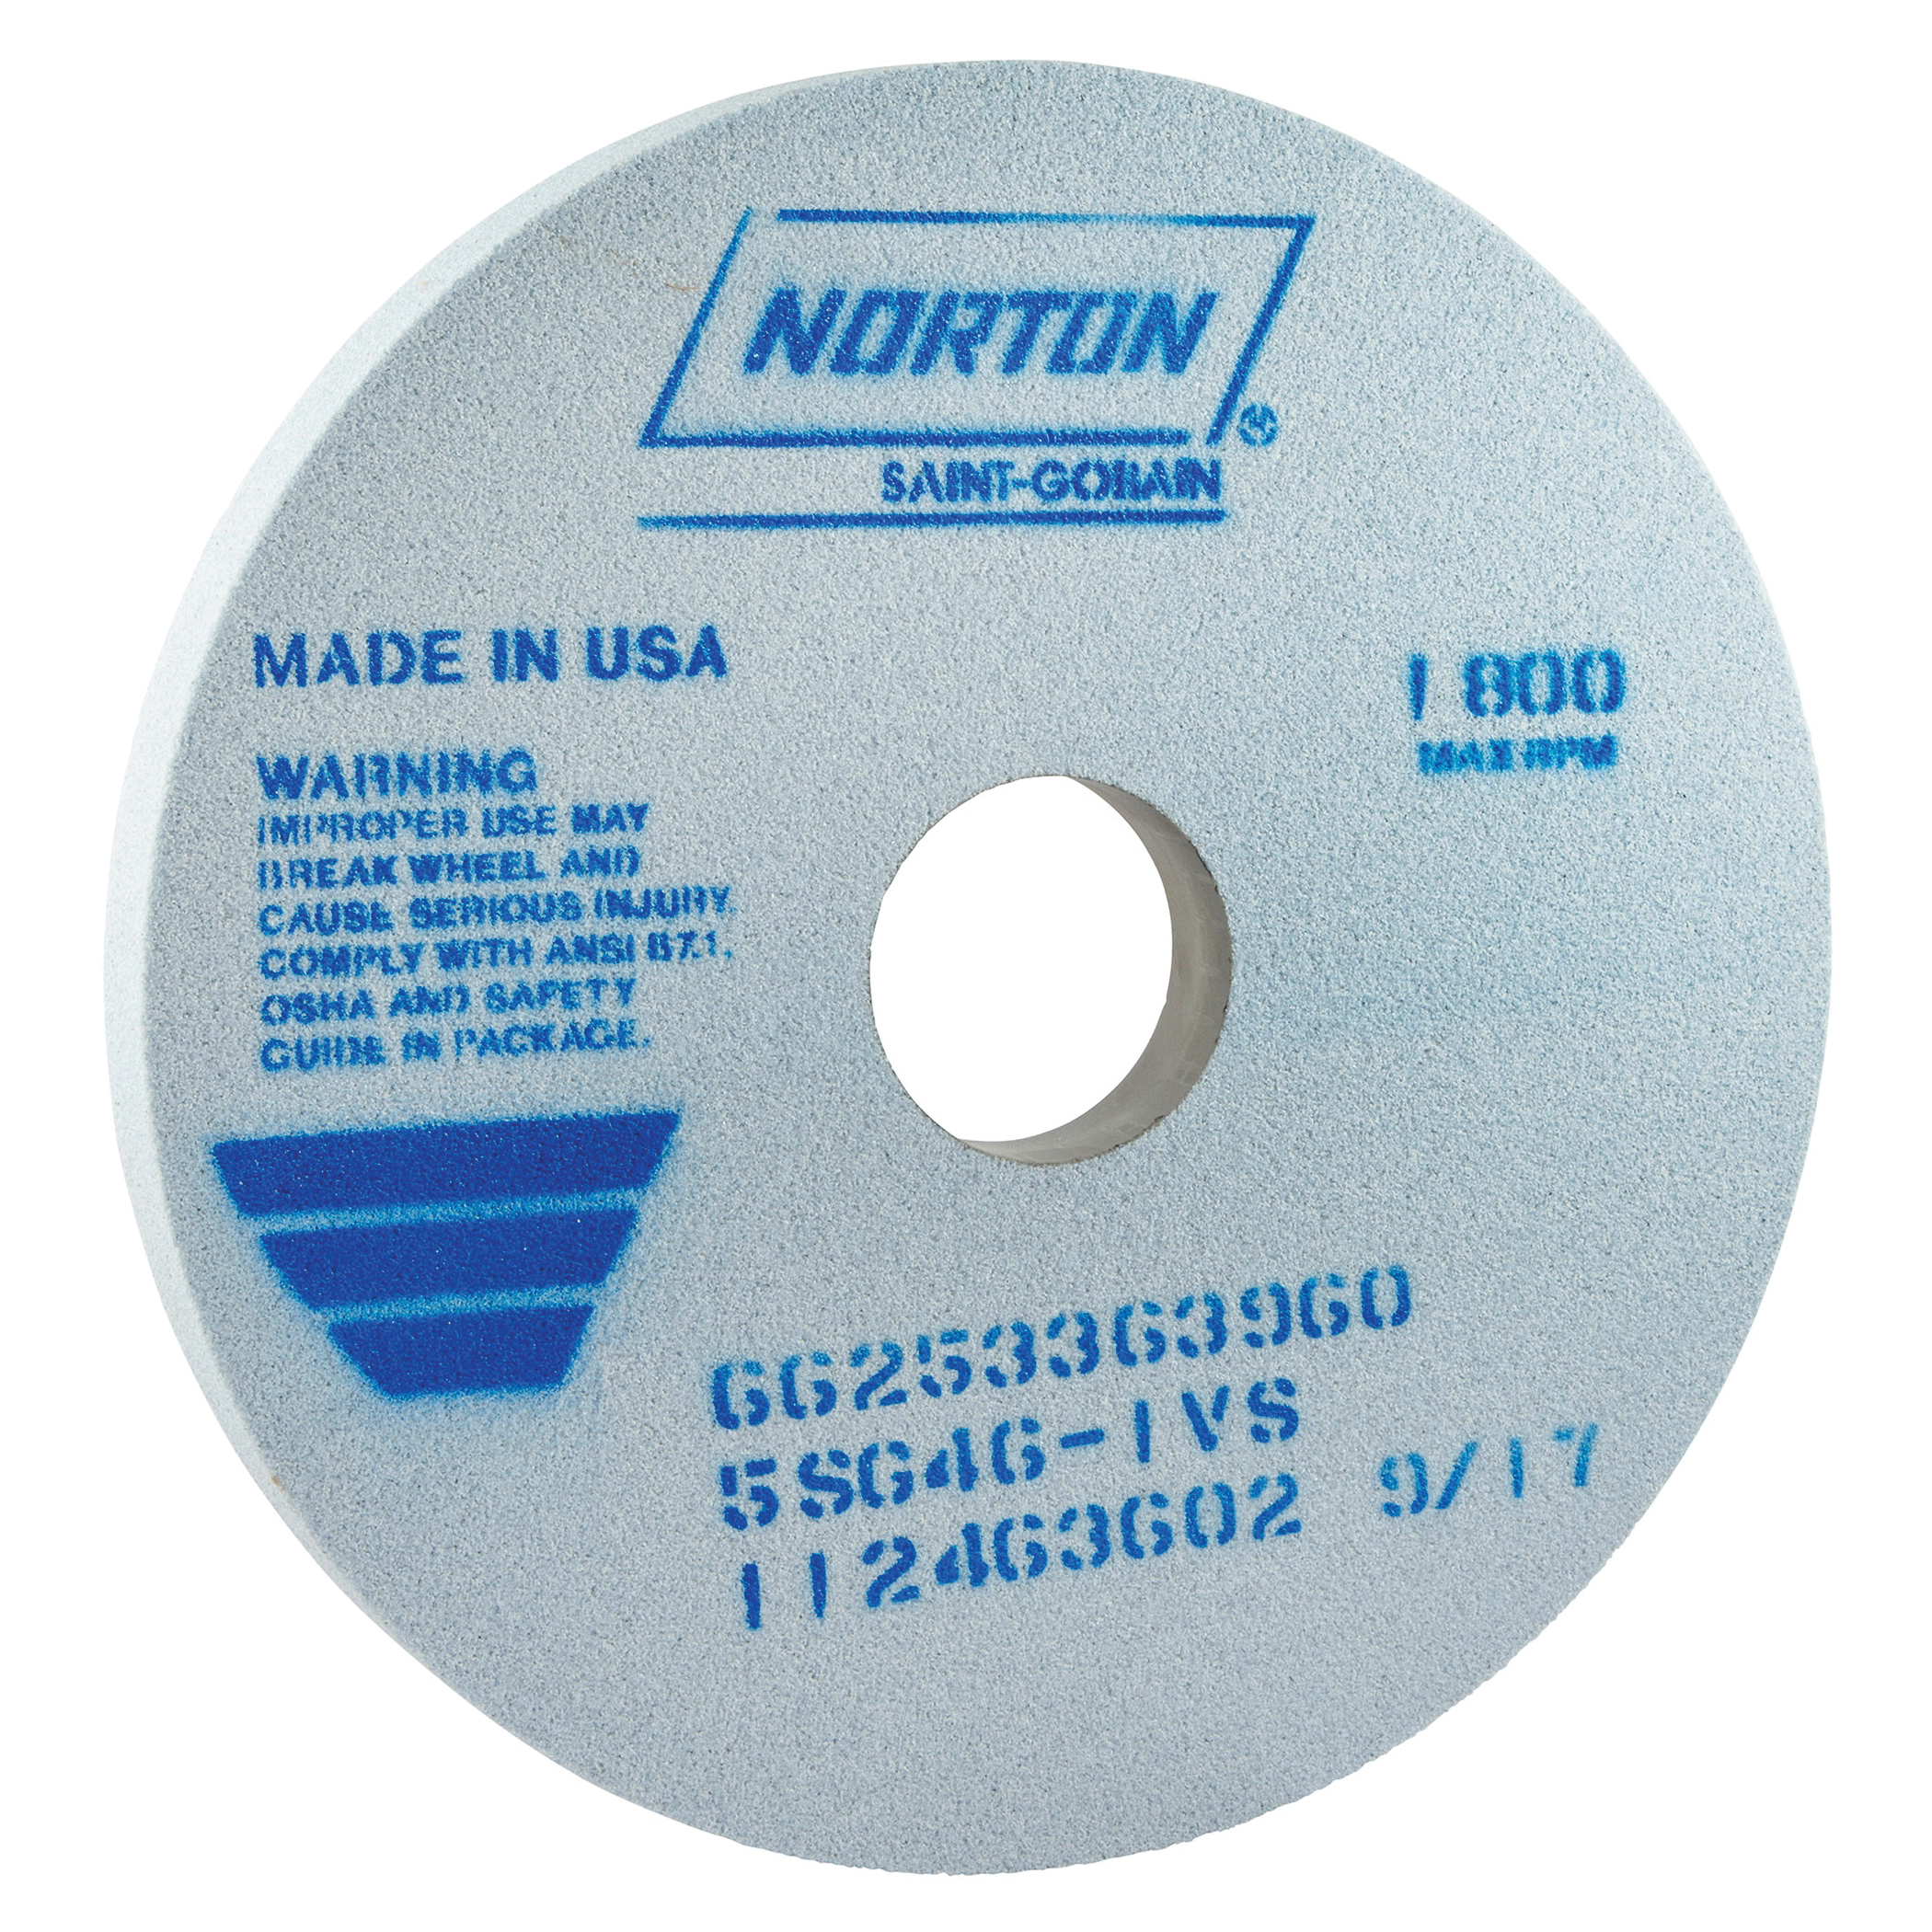 Norton® 66253363960 5SG Straight Toolroom Wheel, 14 in Dia x 1 in THK, 3 in Center Hole, 46 Grit, Ceramic Alumina/Friable Aluminum Oxide Abrasive